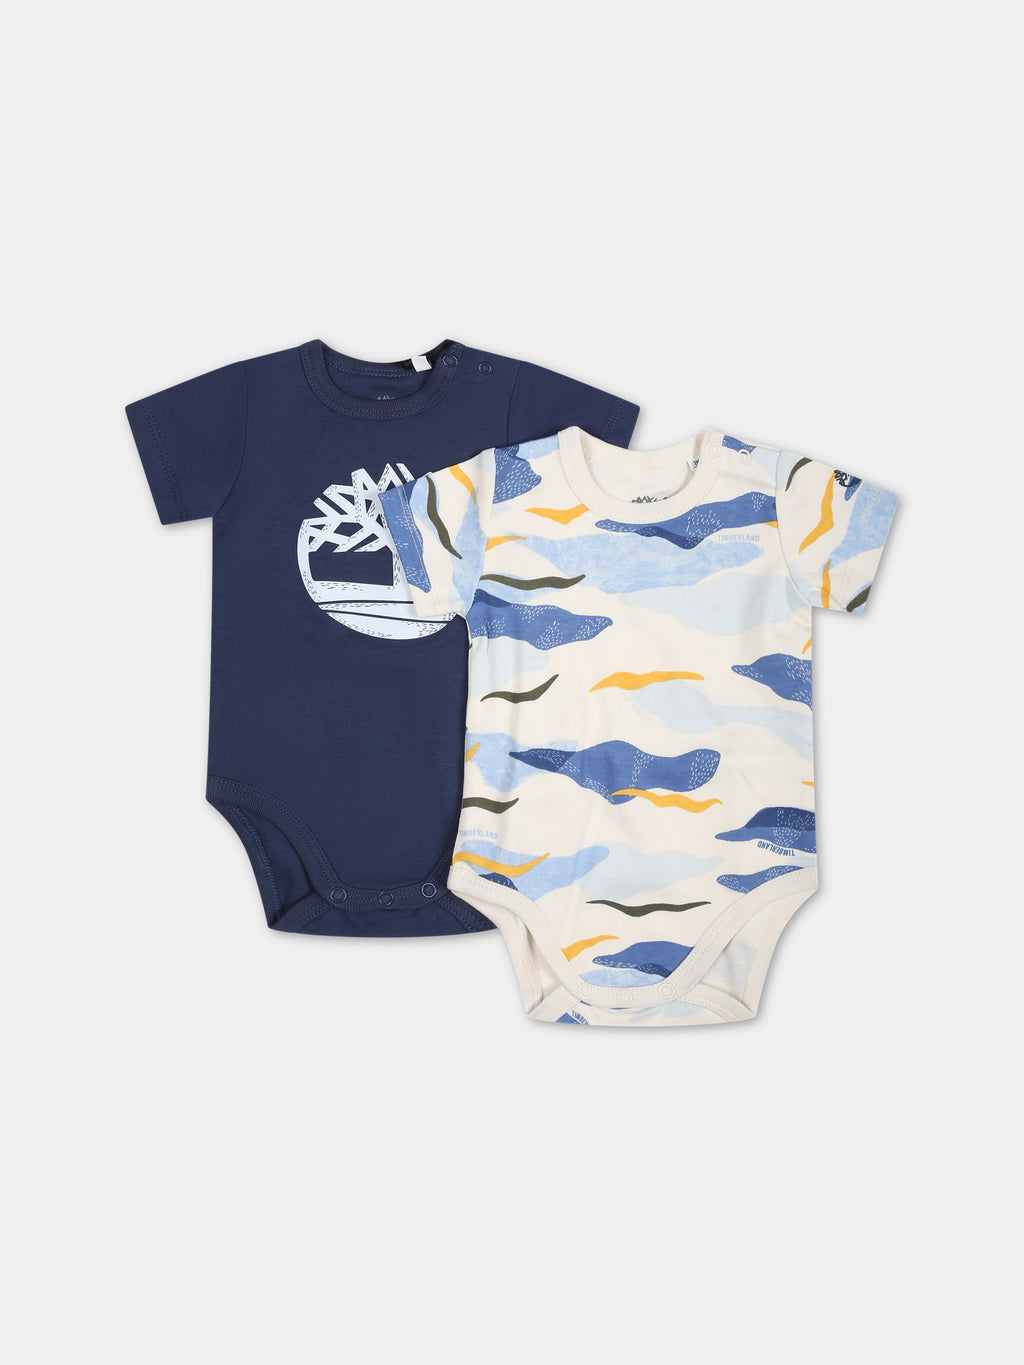 Blue bodysuit set for baby boy with logo